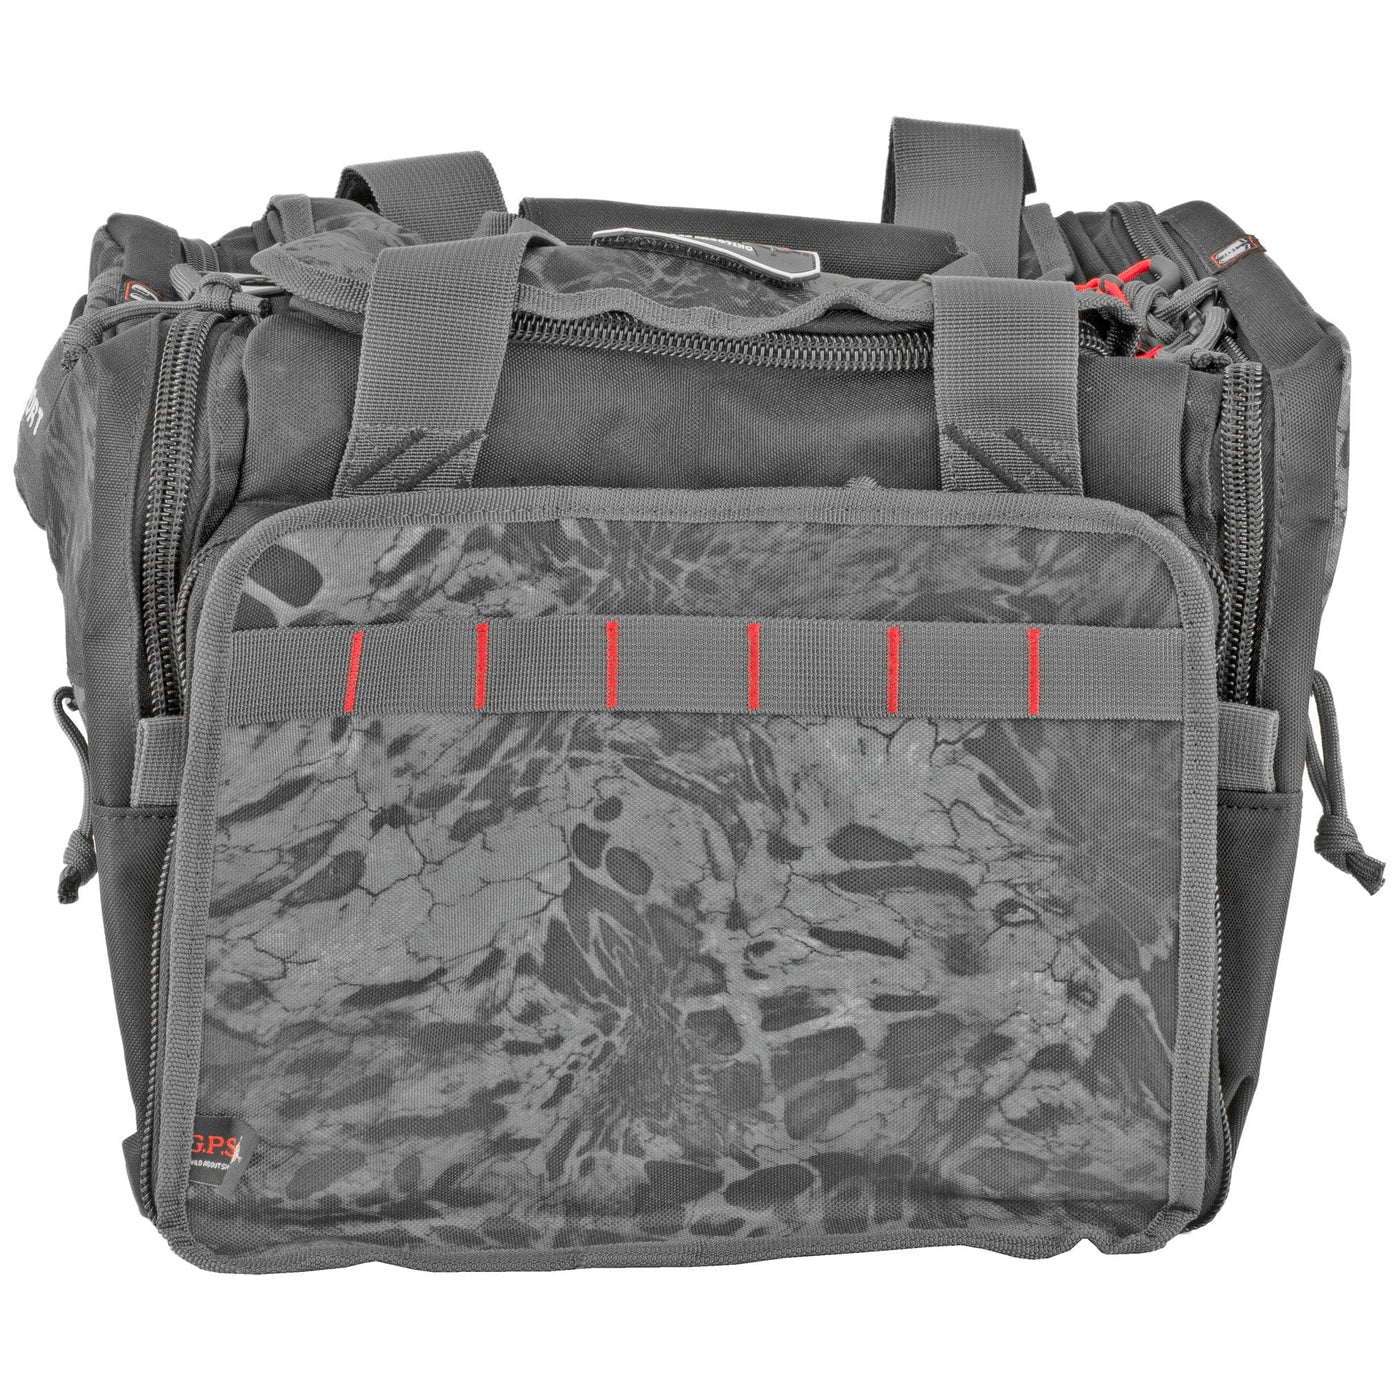 G*Outdoors Gps Medium Range Ge Bag Med Blackout Firearm Accessories